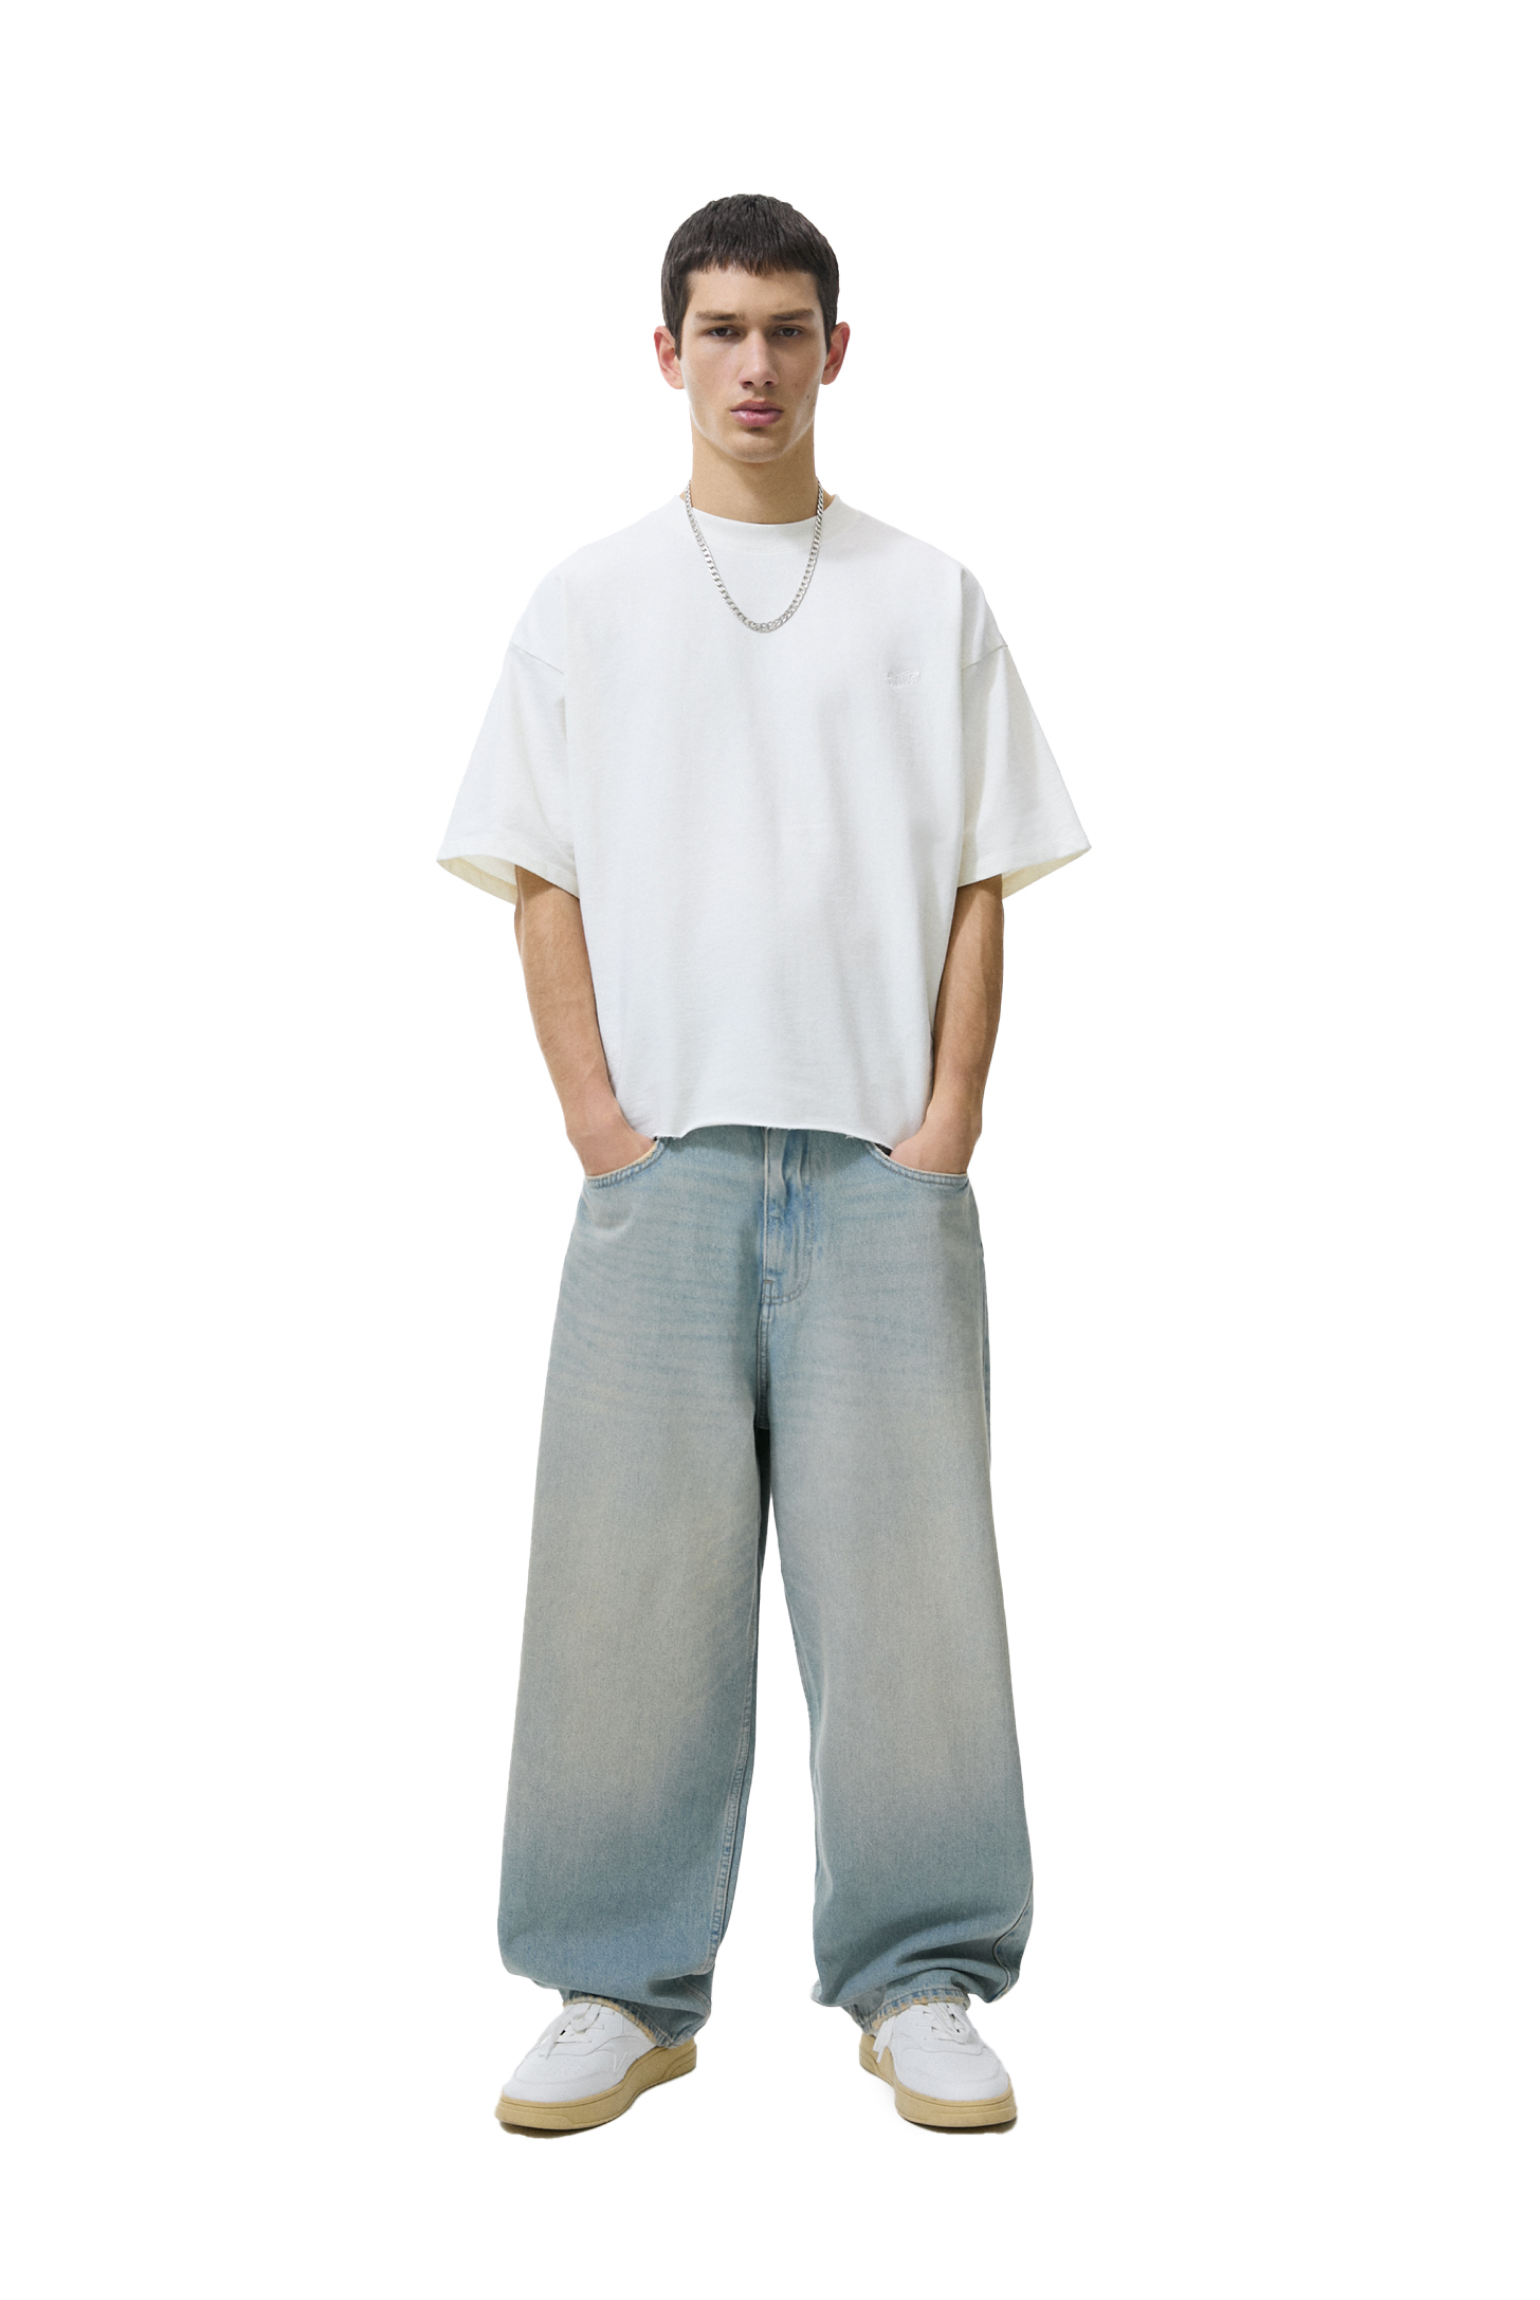 Relaxed - Jeans - Clothing - Man - PULL&BEAR Kazakhstan